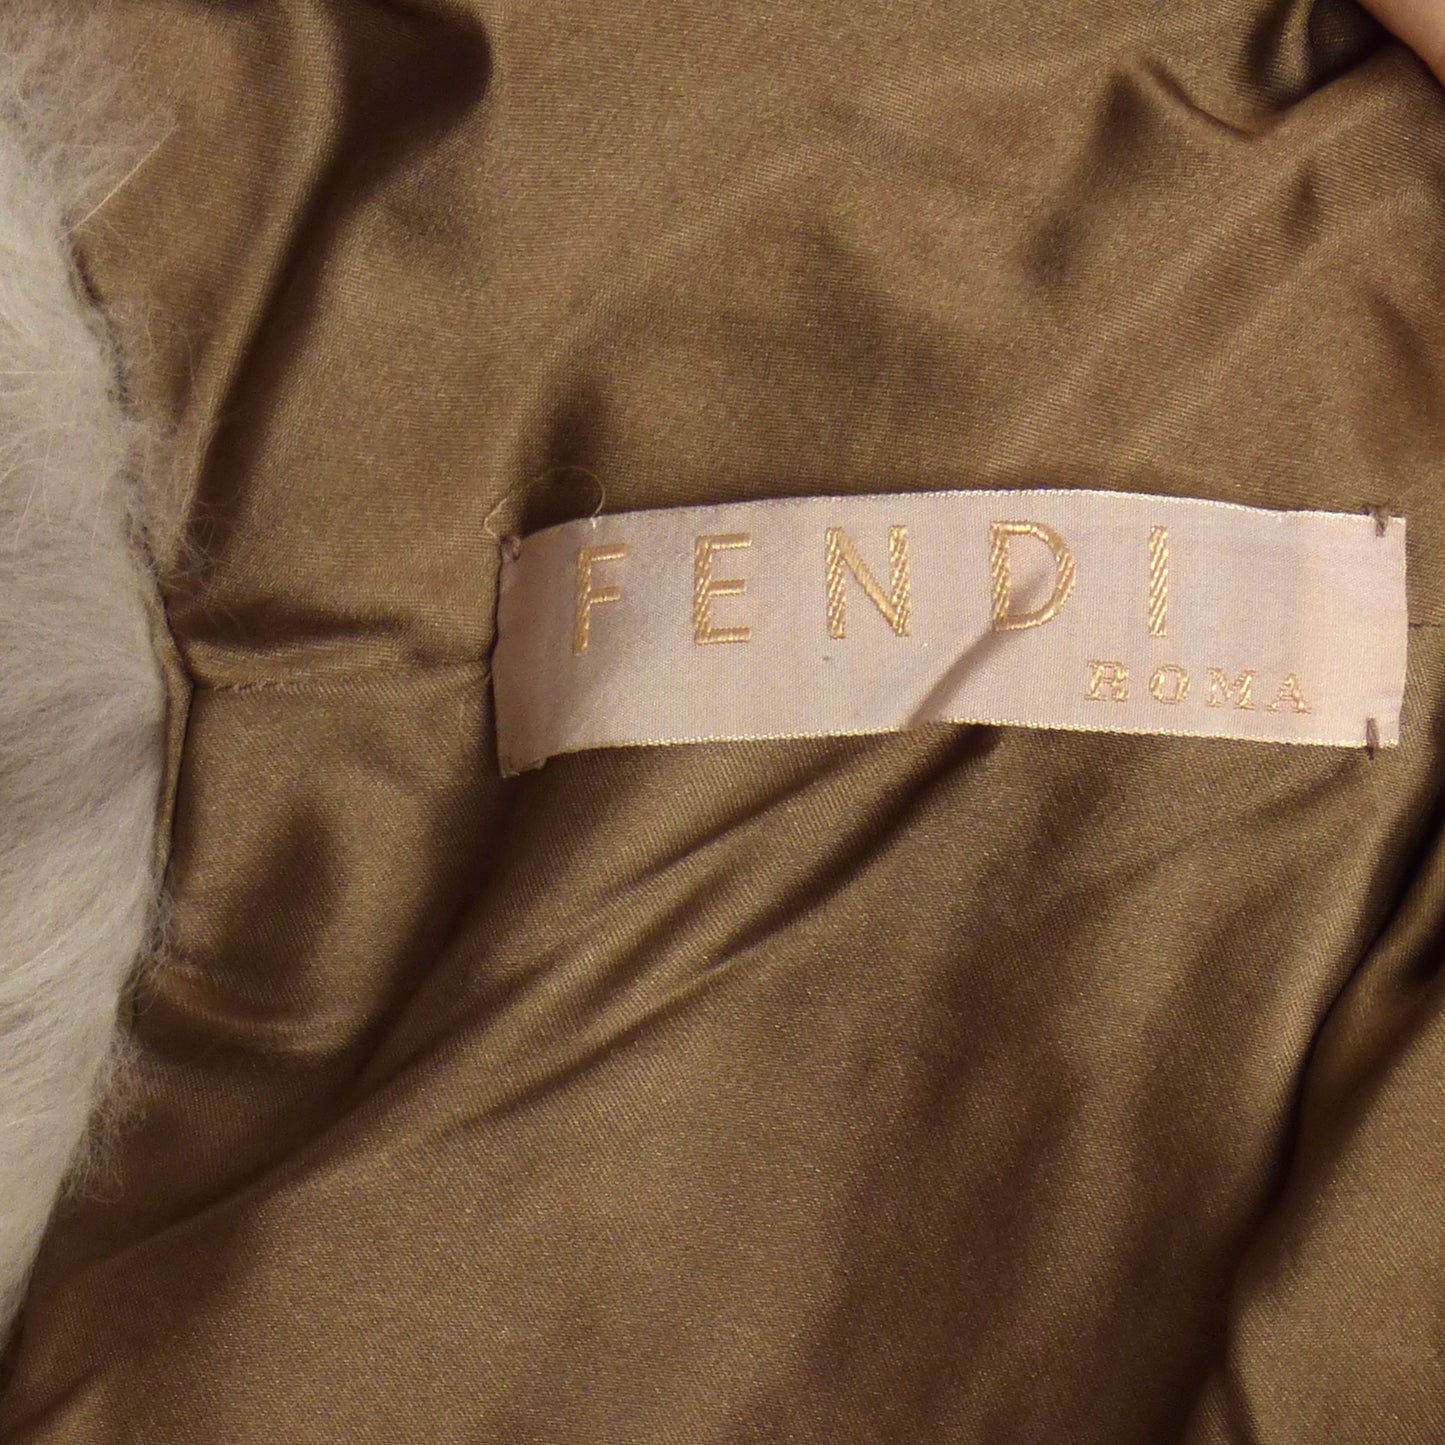 FENDI- 1970s Fox Fur Sleeves